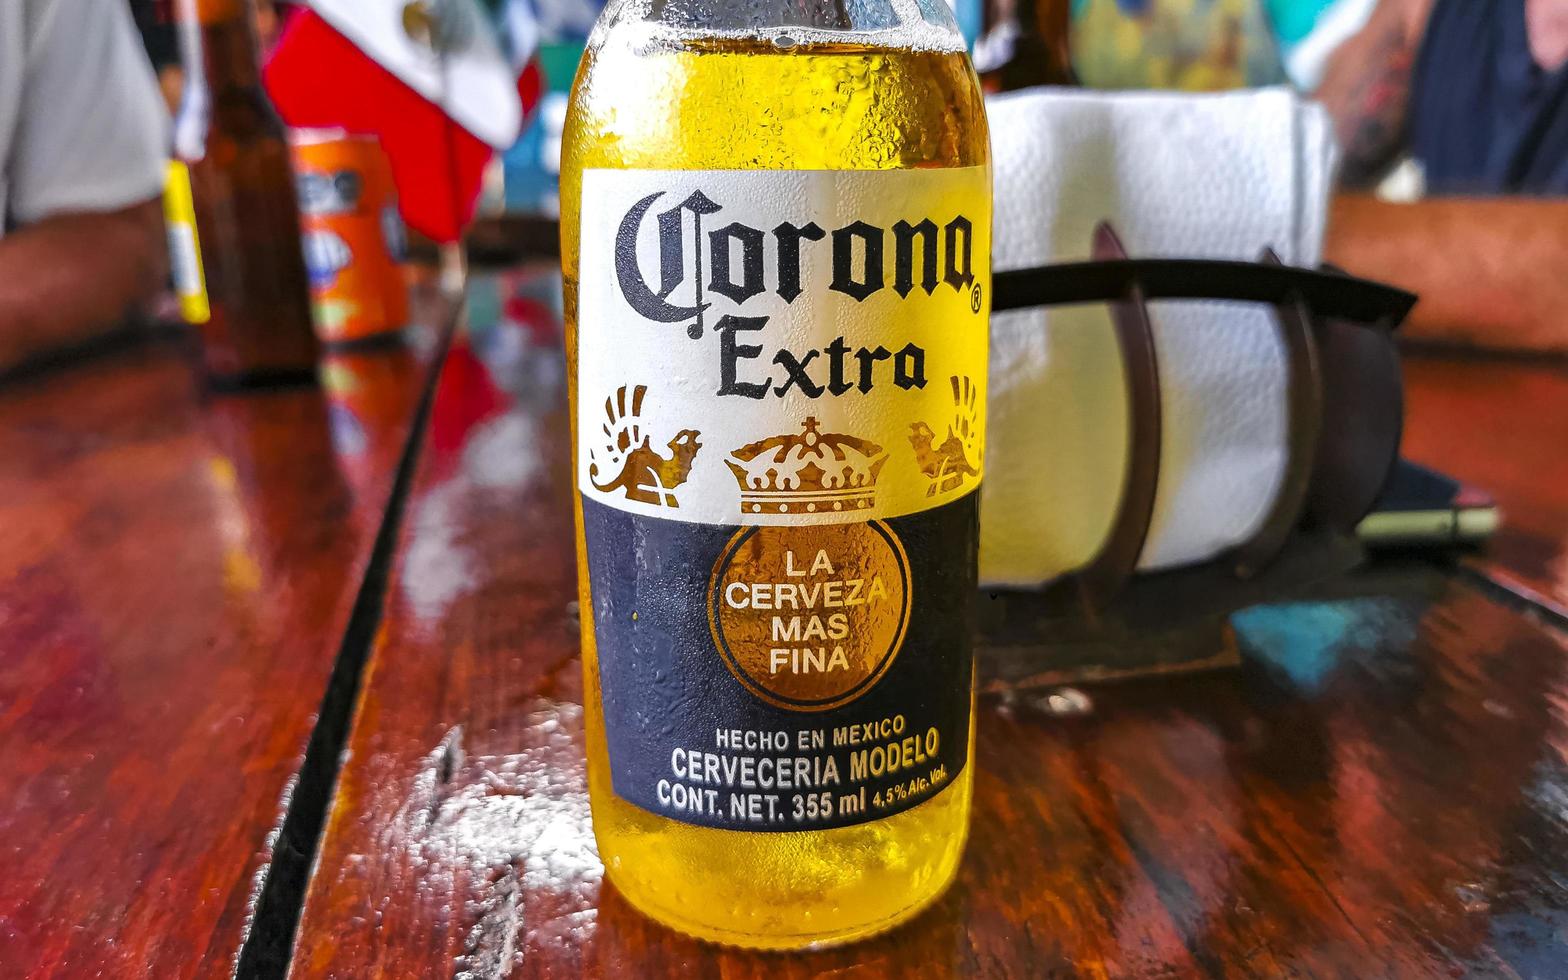 playa del carmen quintana roo mexico 2022 corona cerveza botella en restaurante bar en playa del carmen México. foto